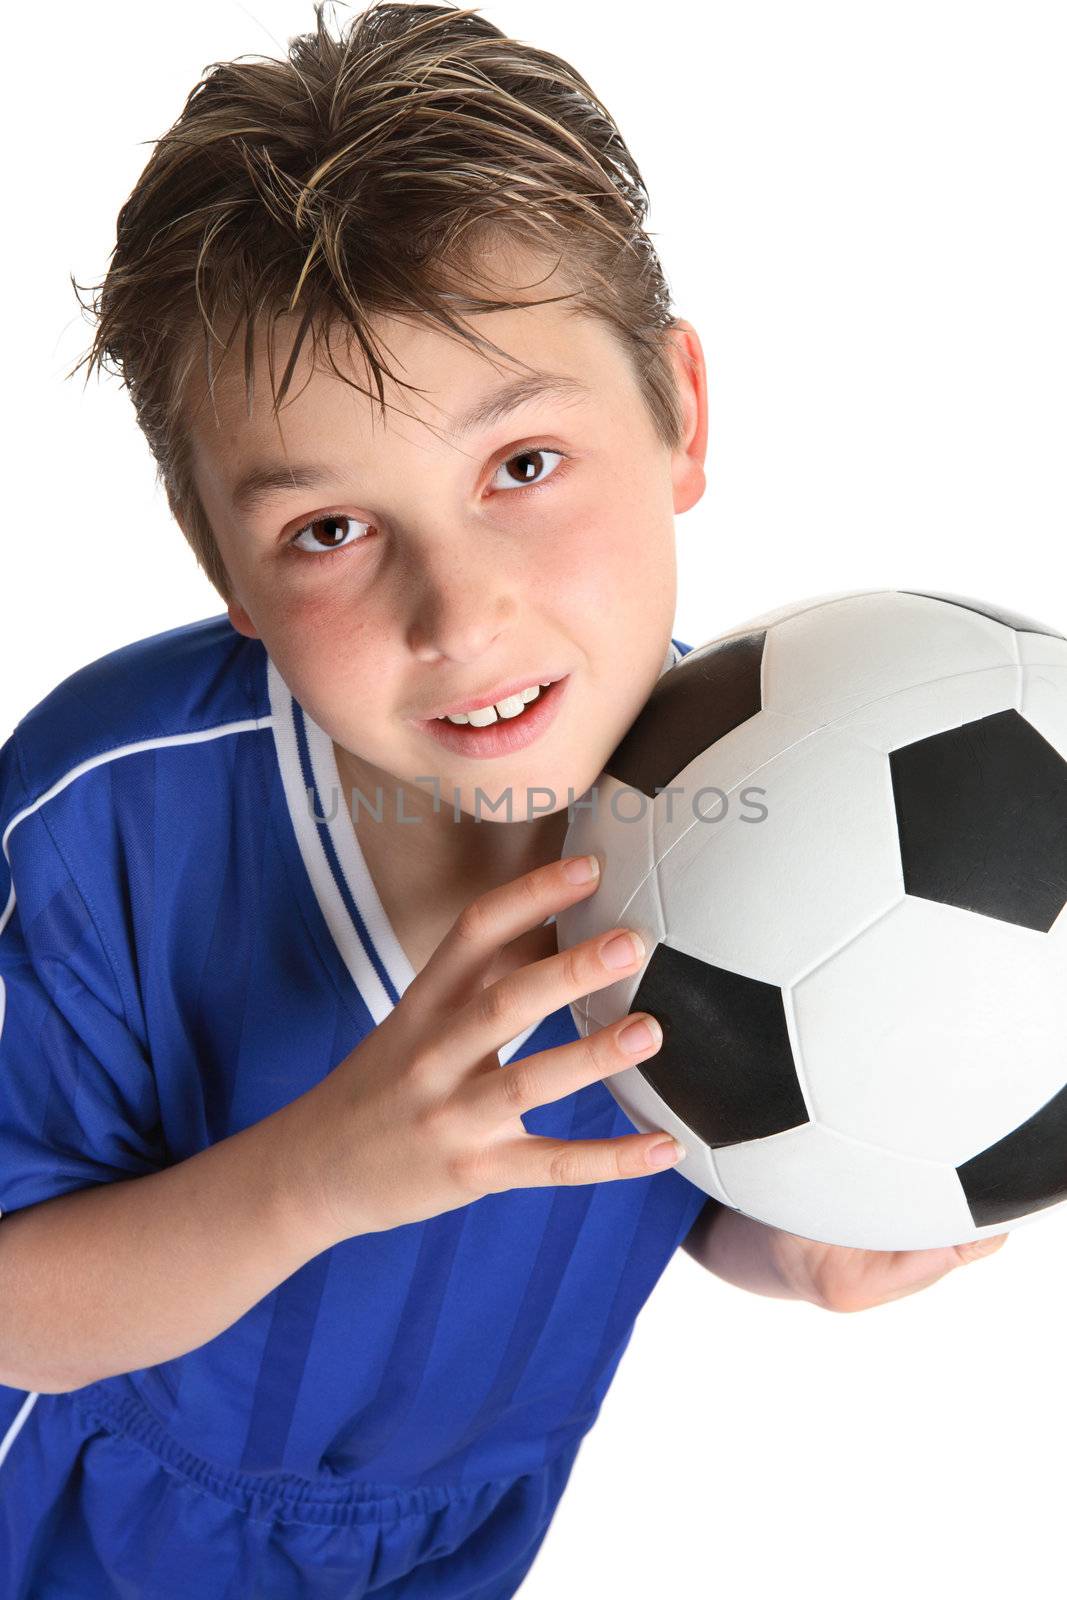 Boy holding a soccer ball by lovleah